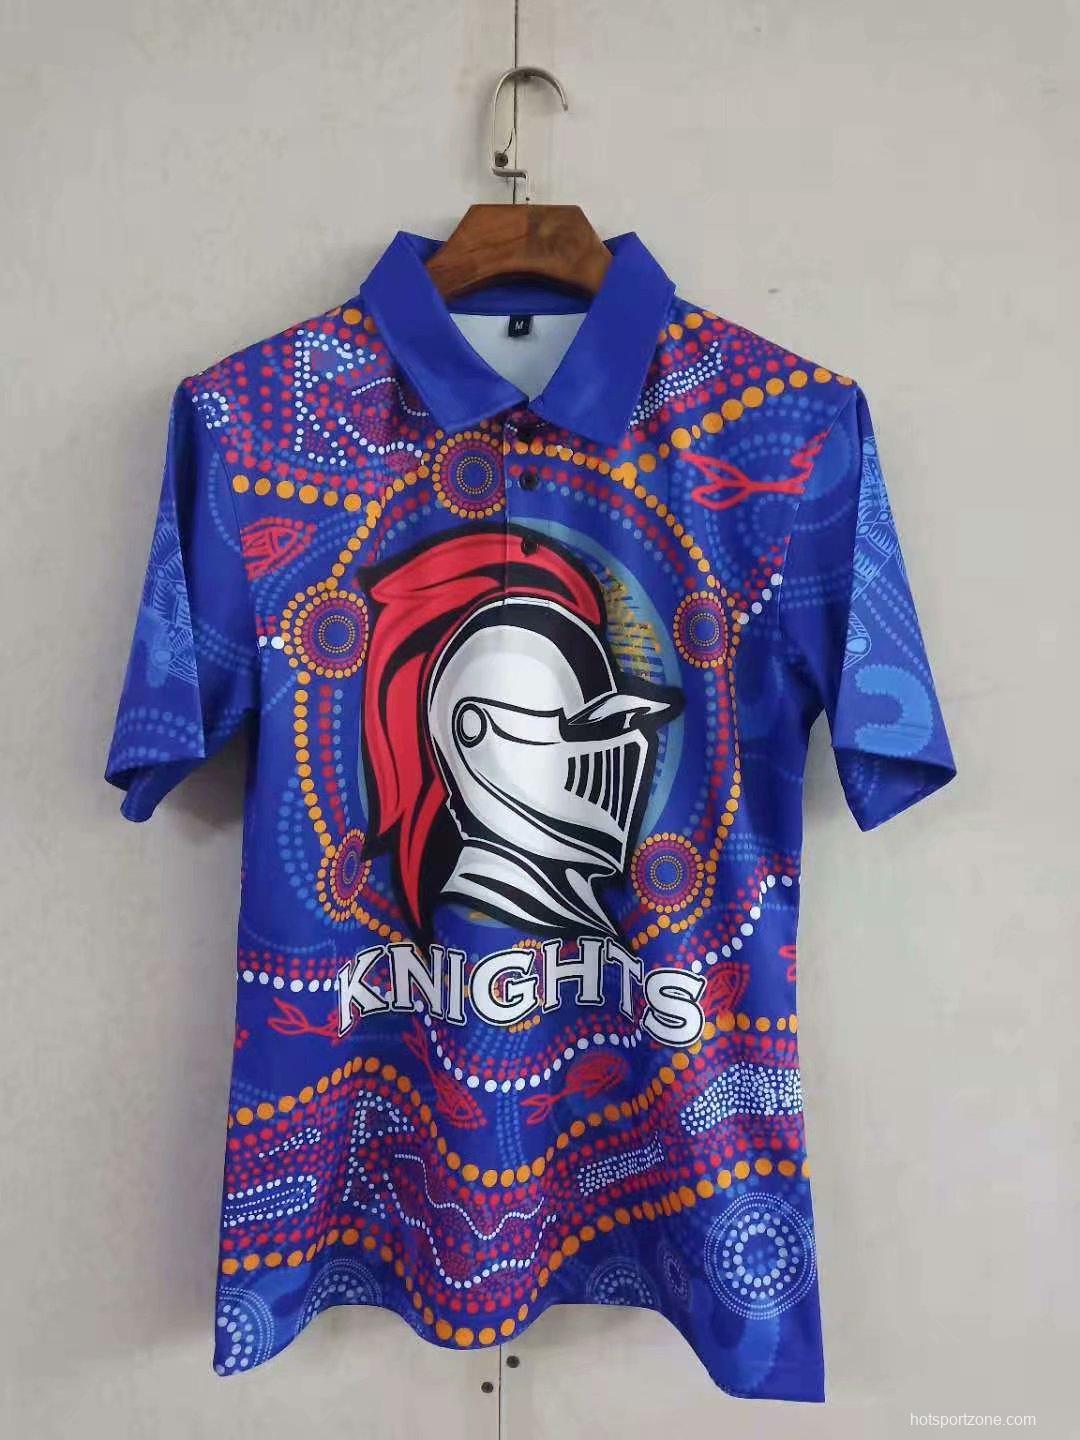 Newcastle Knights 2021 Mens Football Polo Shirt